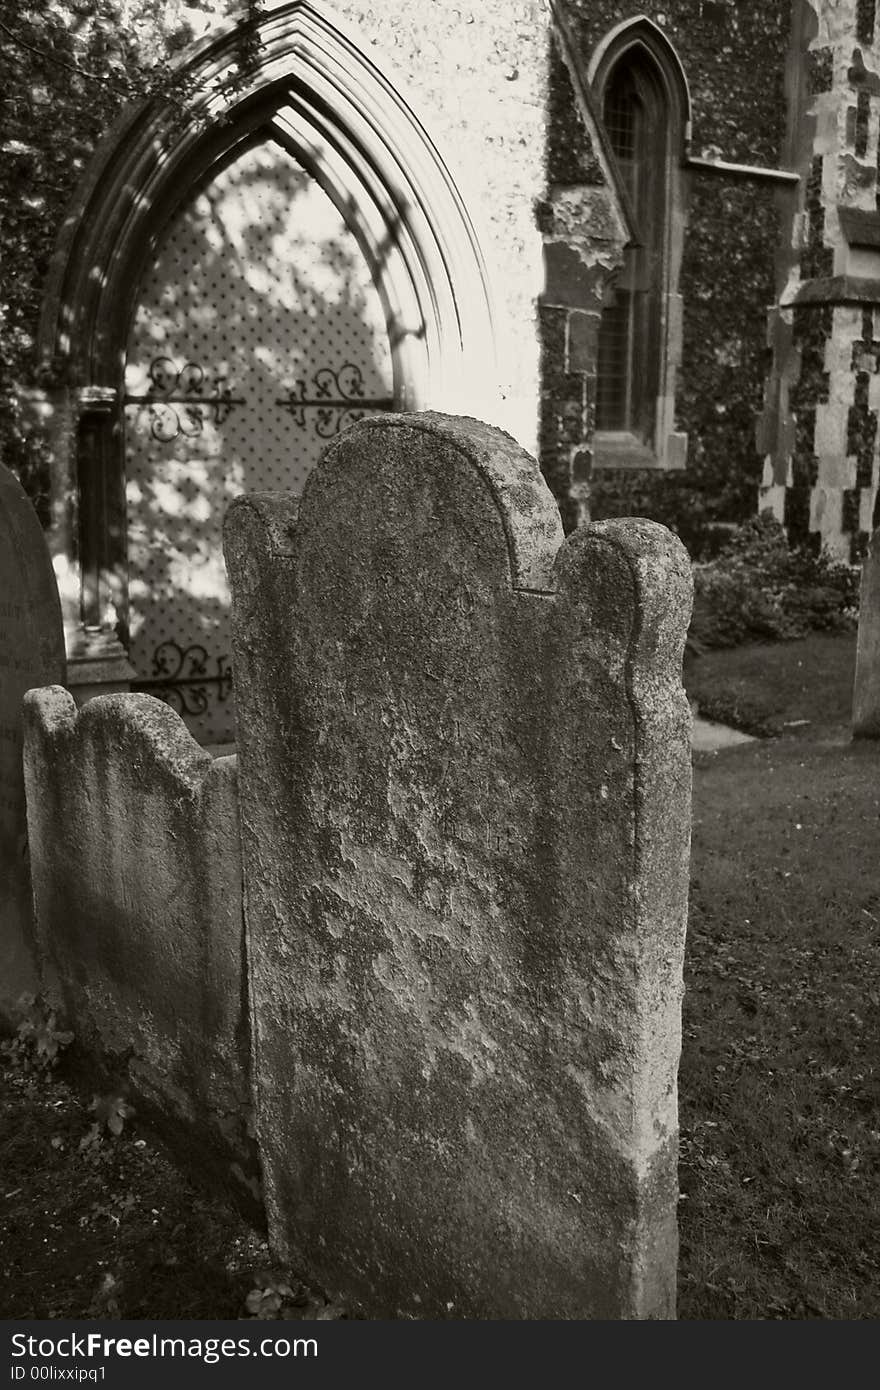 Ancient gravestones in medieval churchyard in black and white. Ancient gravestones in medieval churchyard in black and white